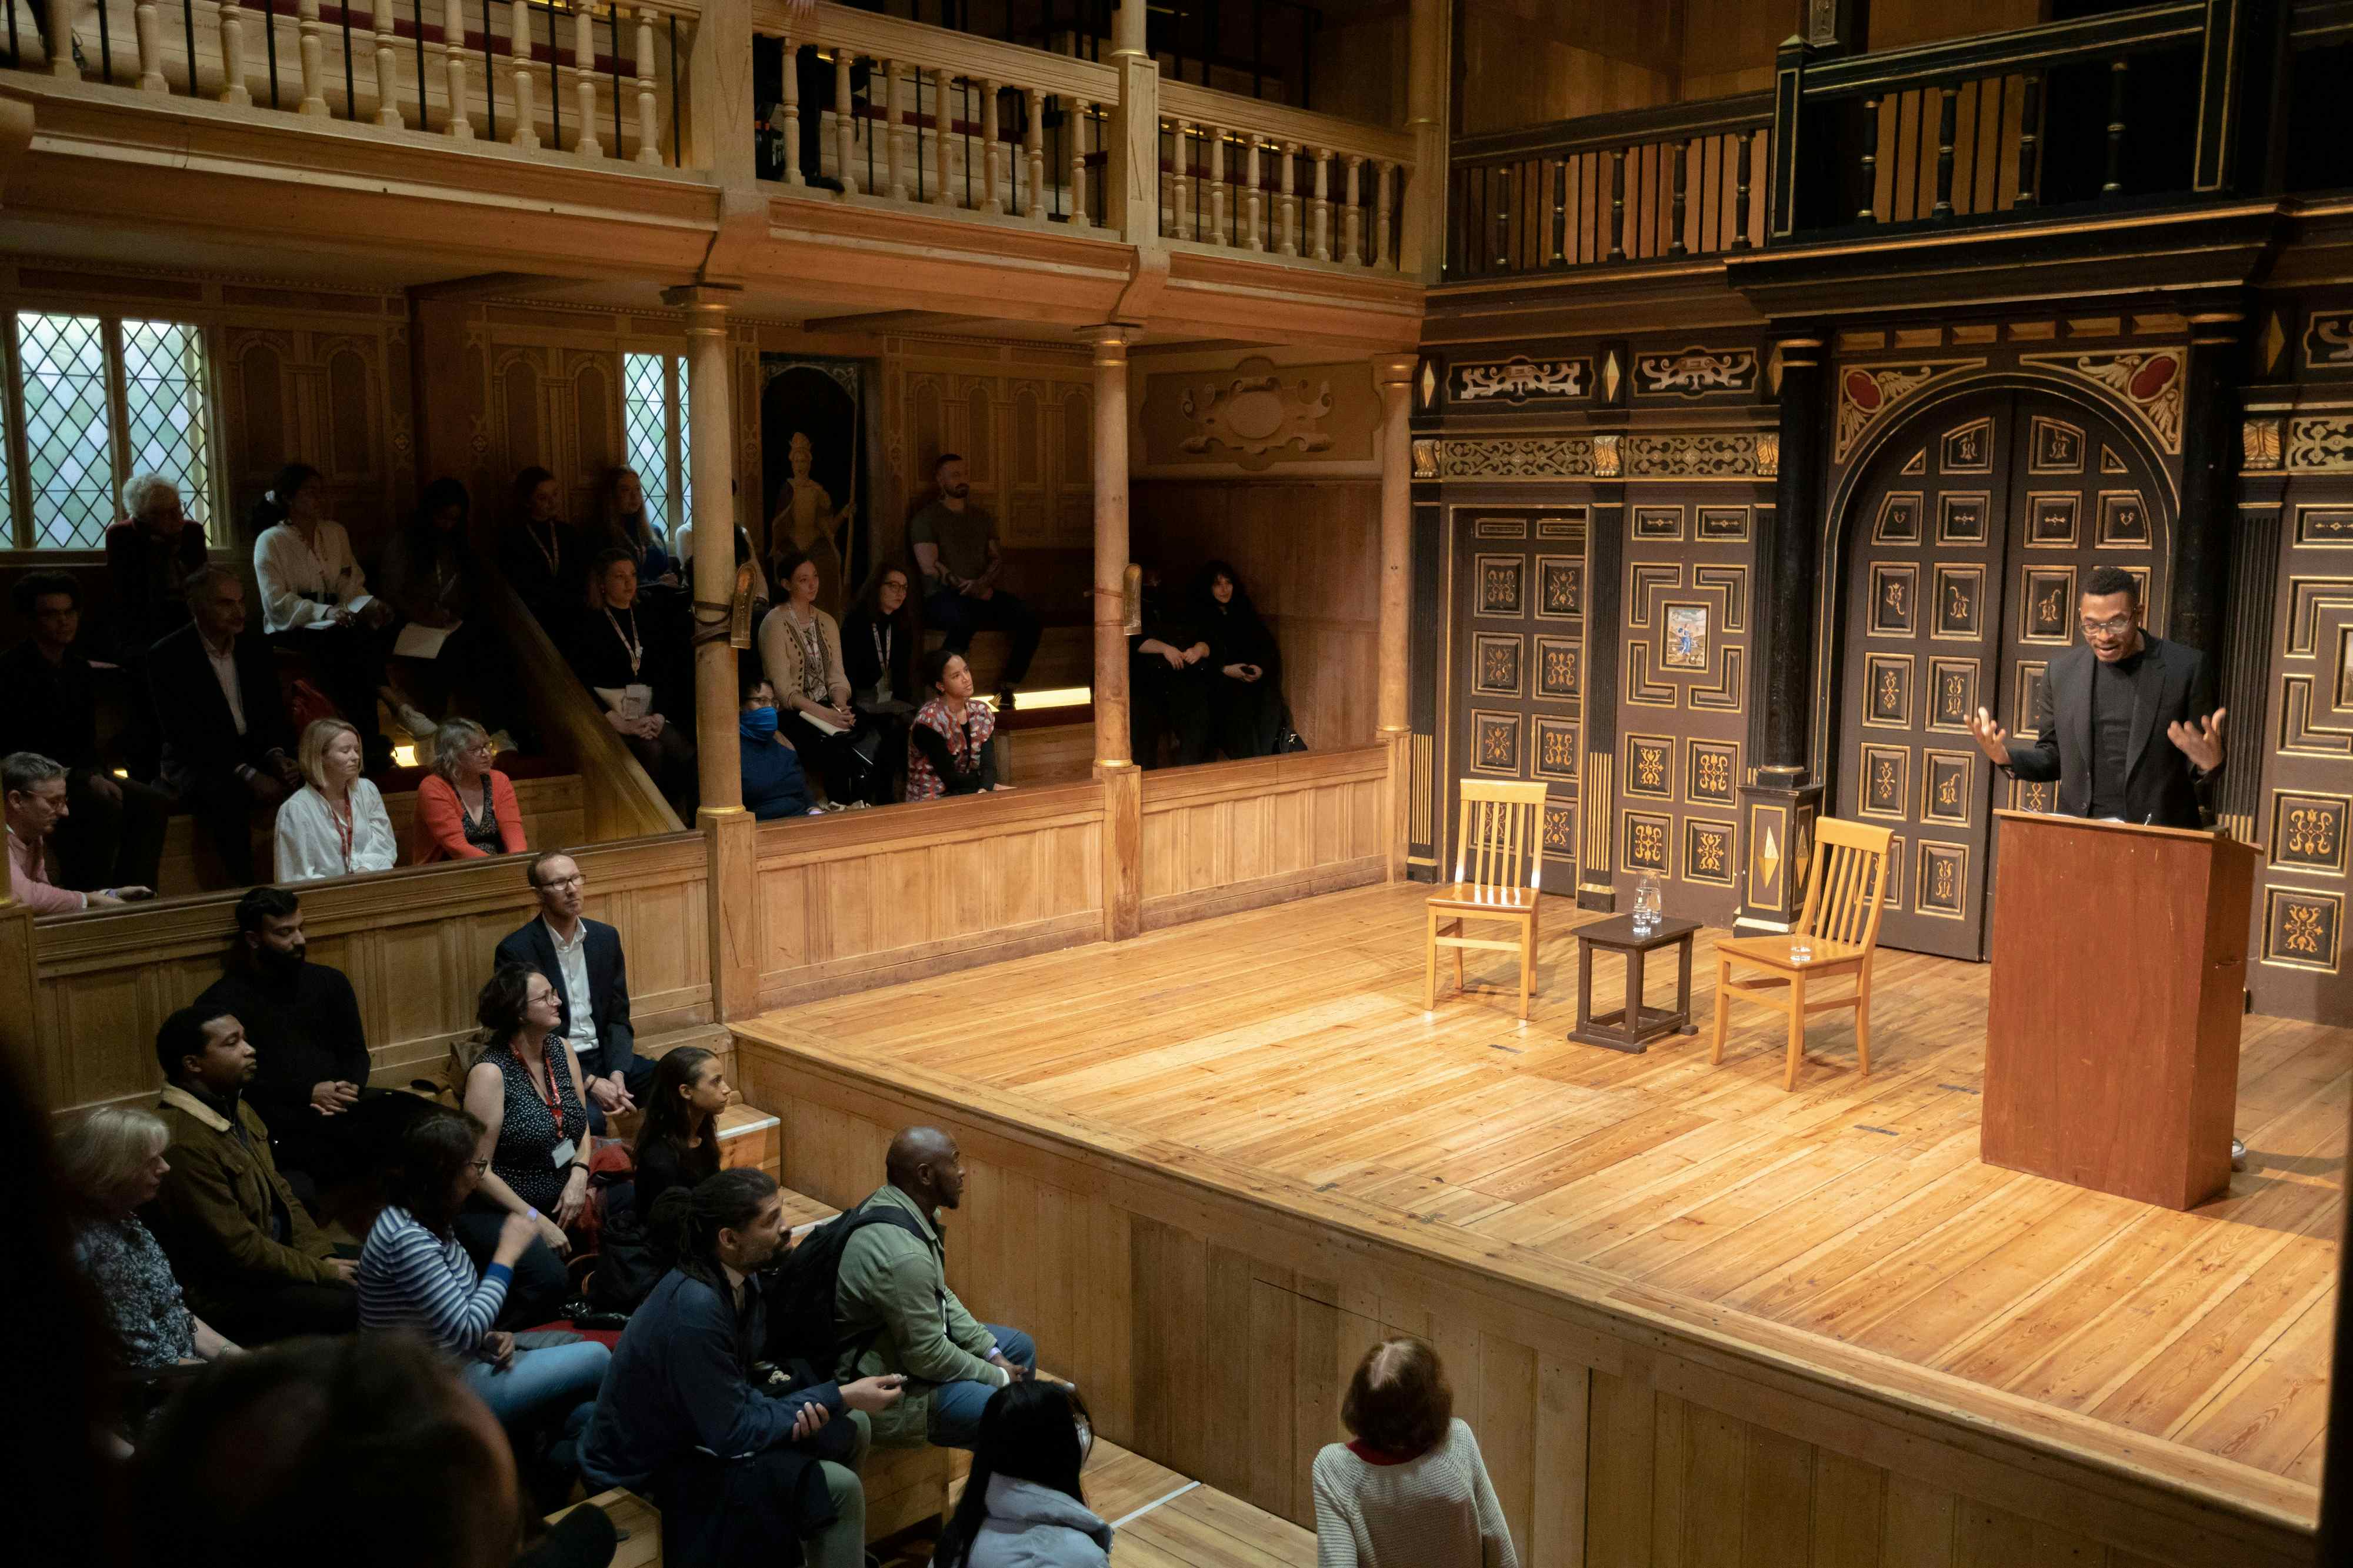 Sam Wanamaker Playhouse, Shakespeare's Globe